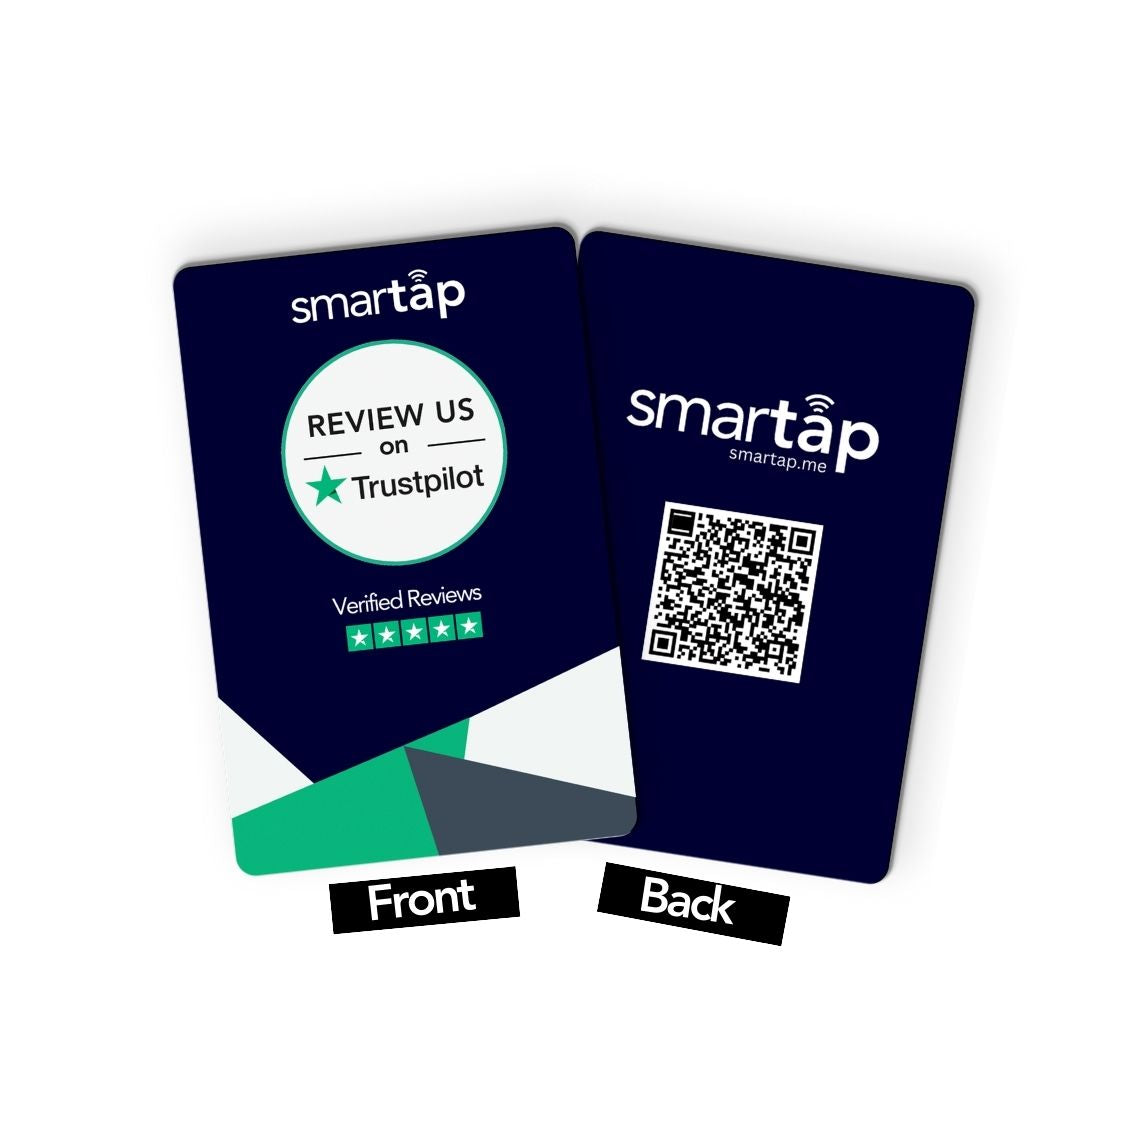 Smartap Trustpilot Reviews Card